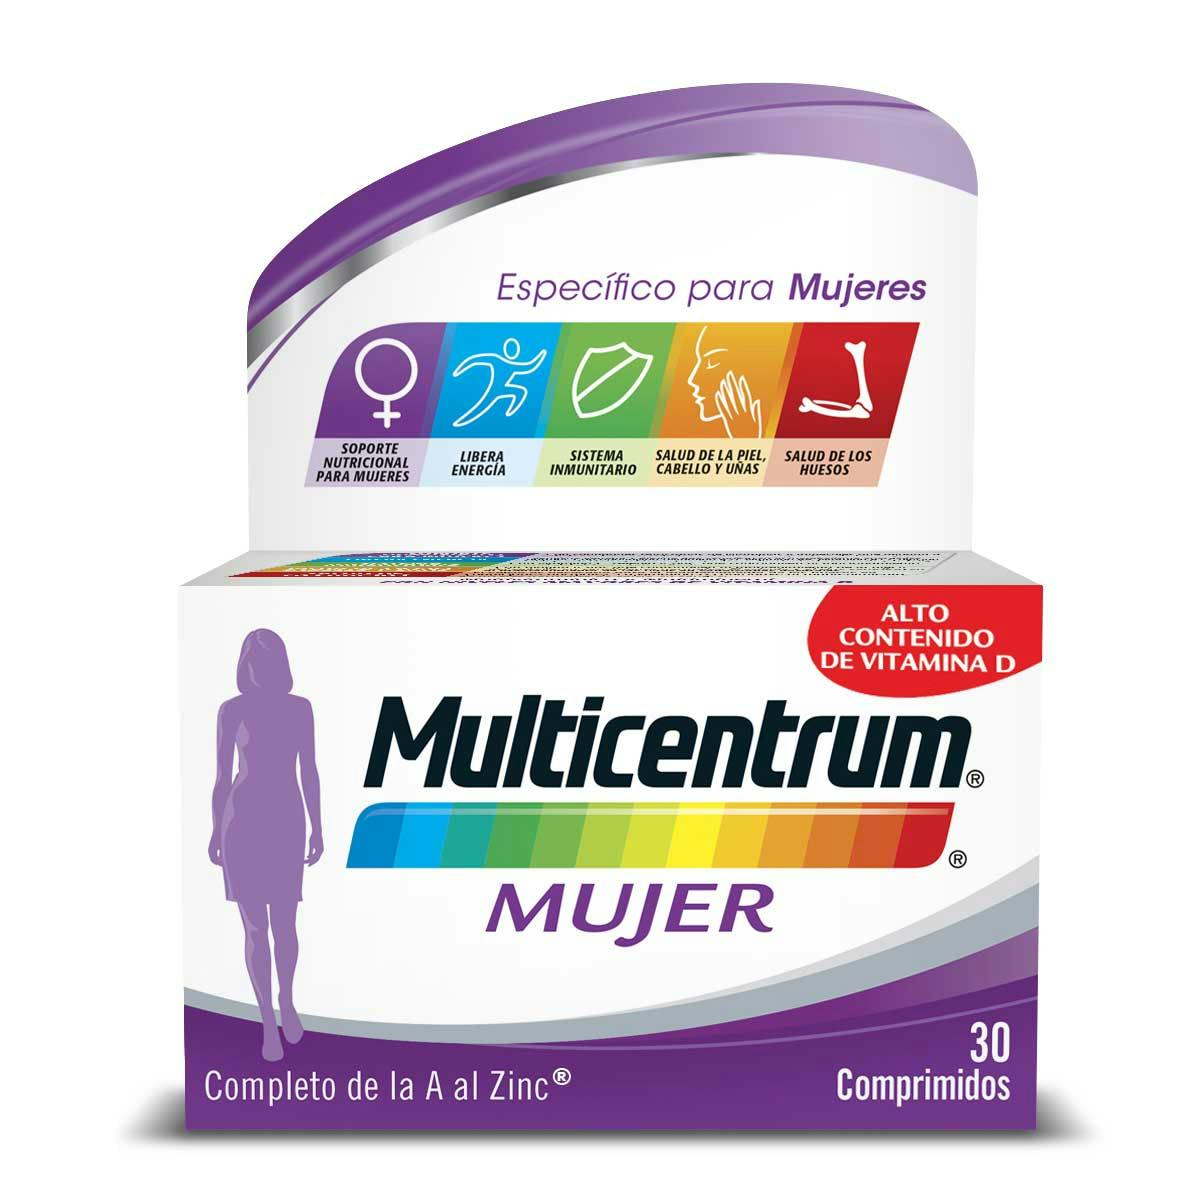 Multivitaminas Mujer - Multicentrum 